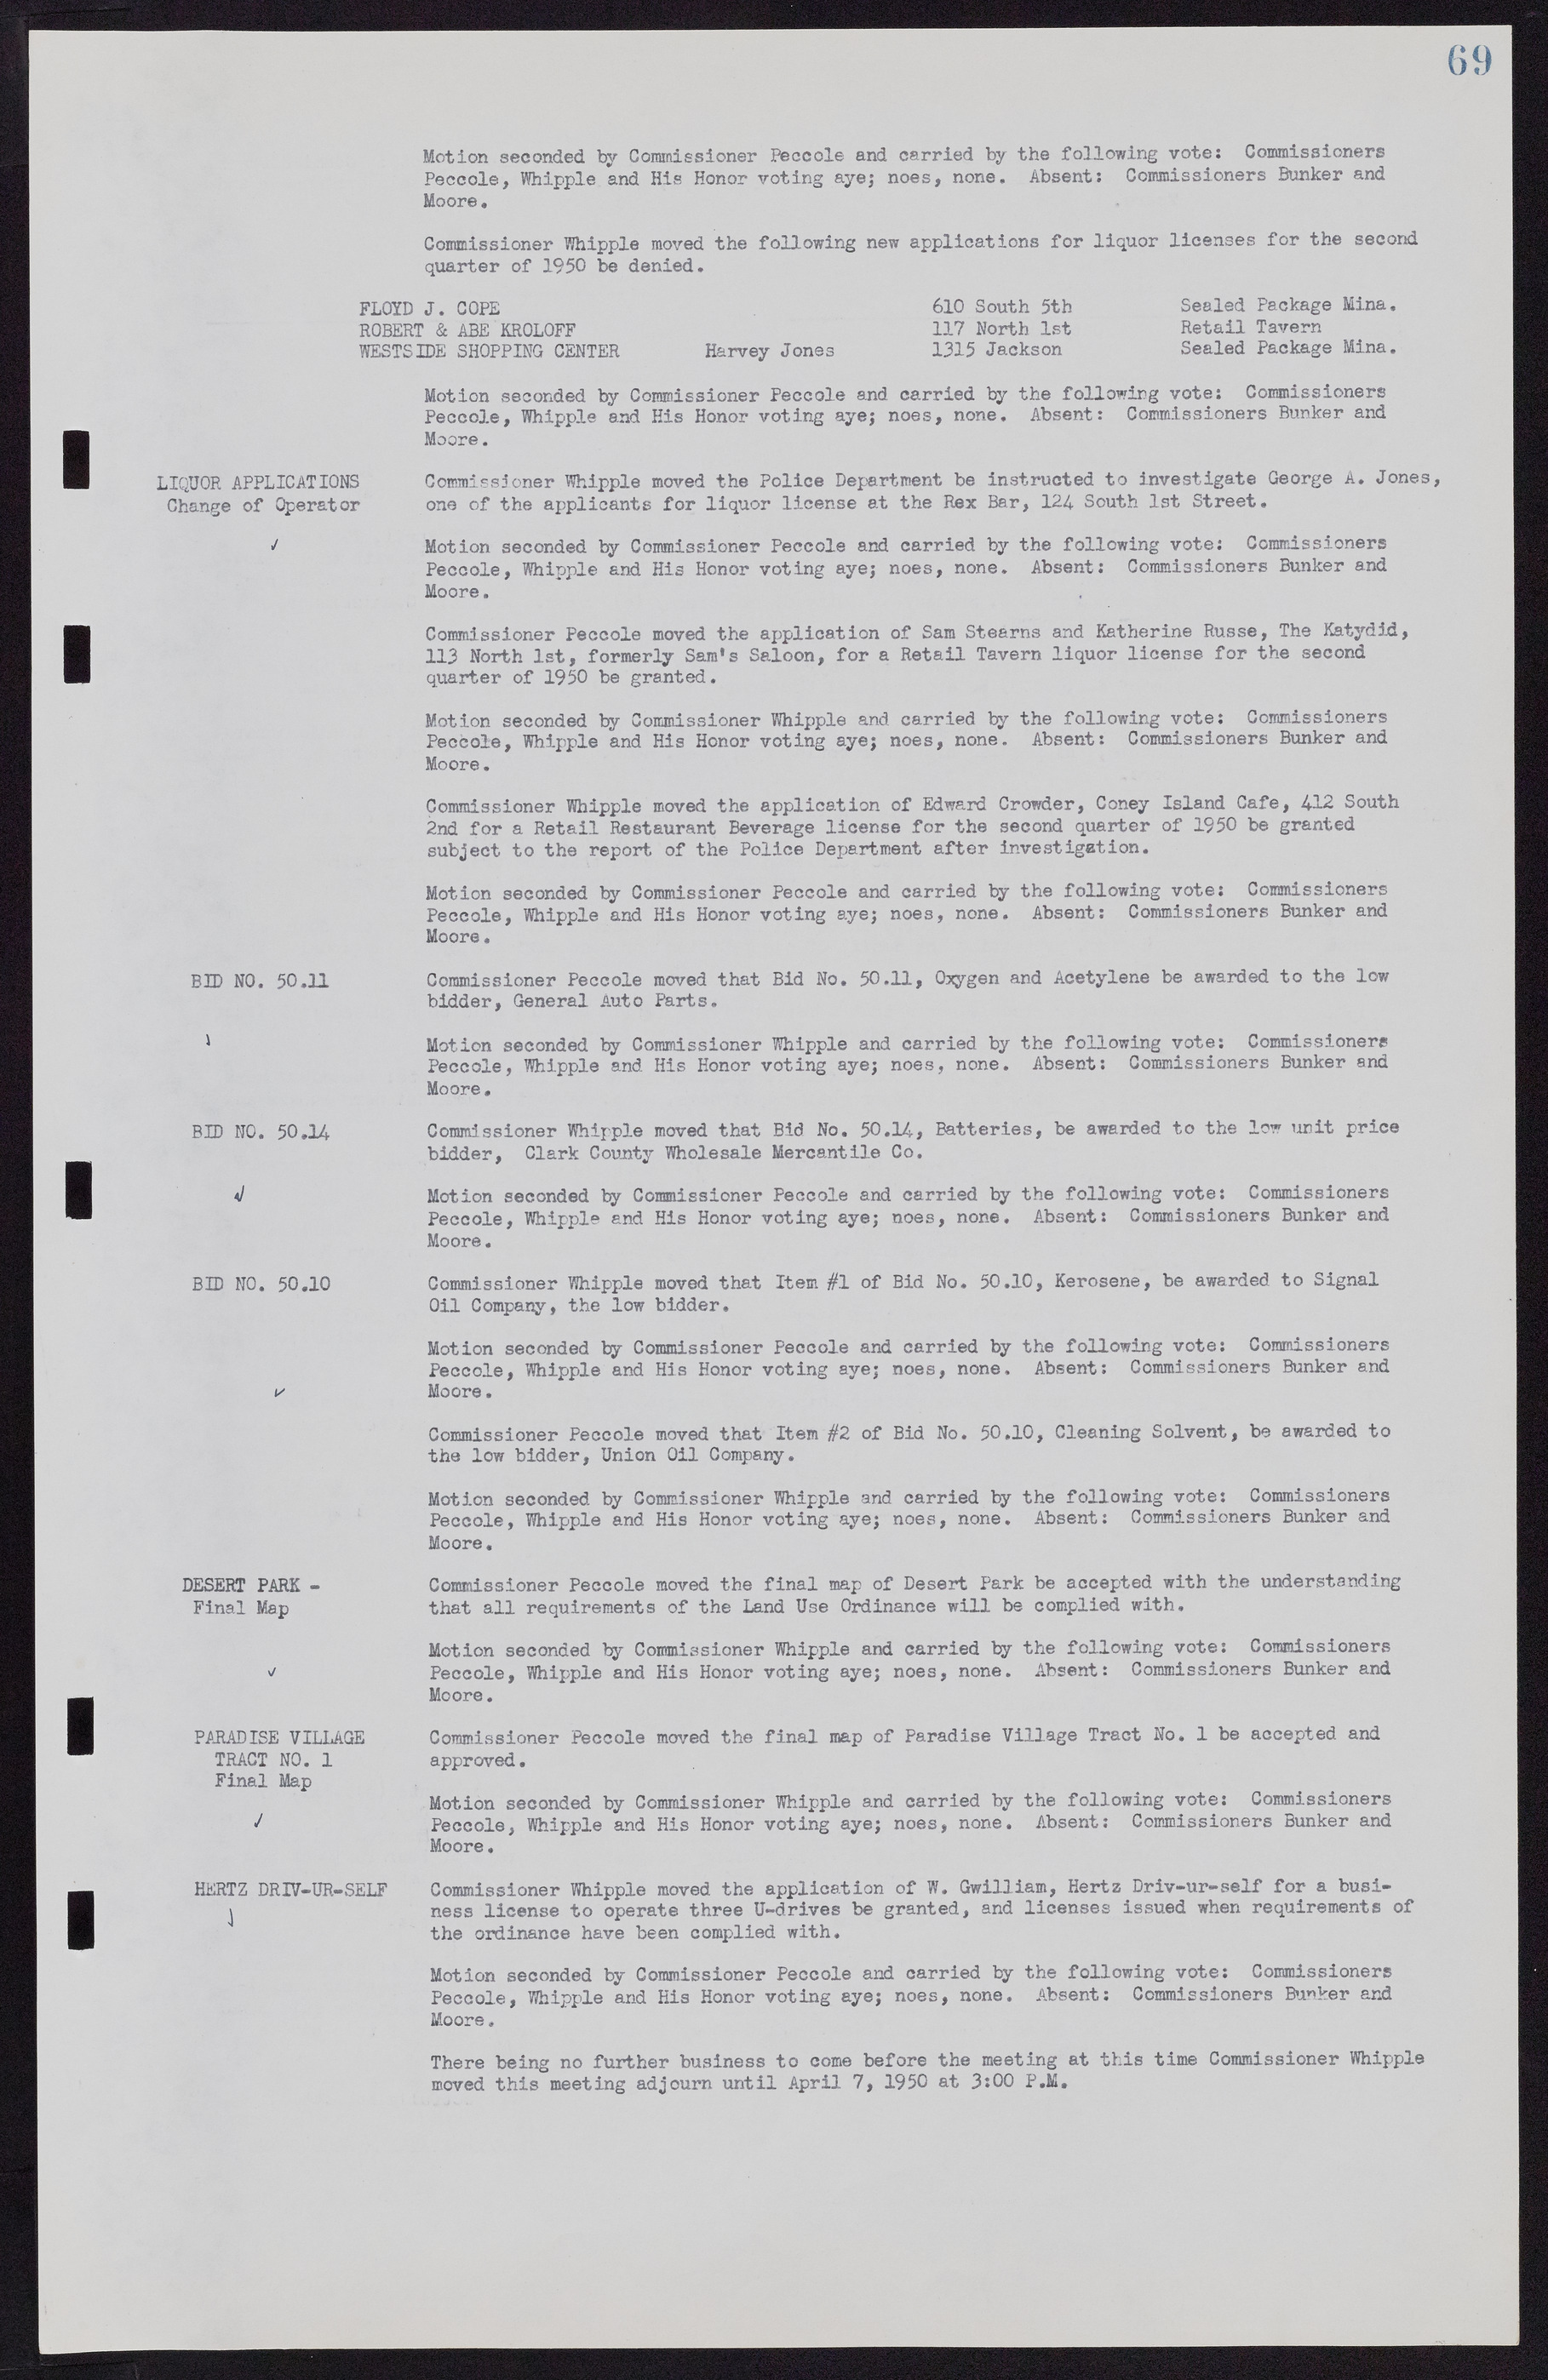 Las Vegas City Commission Minutes, November 7, 1949 to May 21, 1952, lvc000007-77